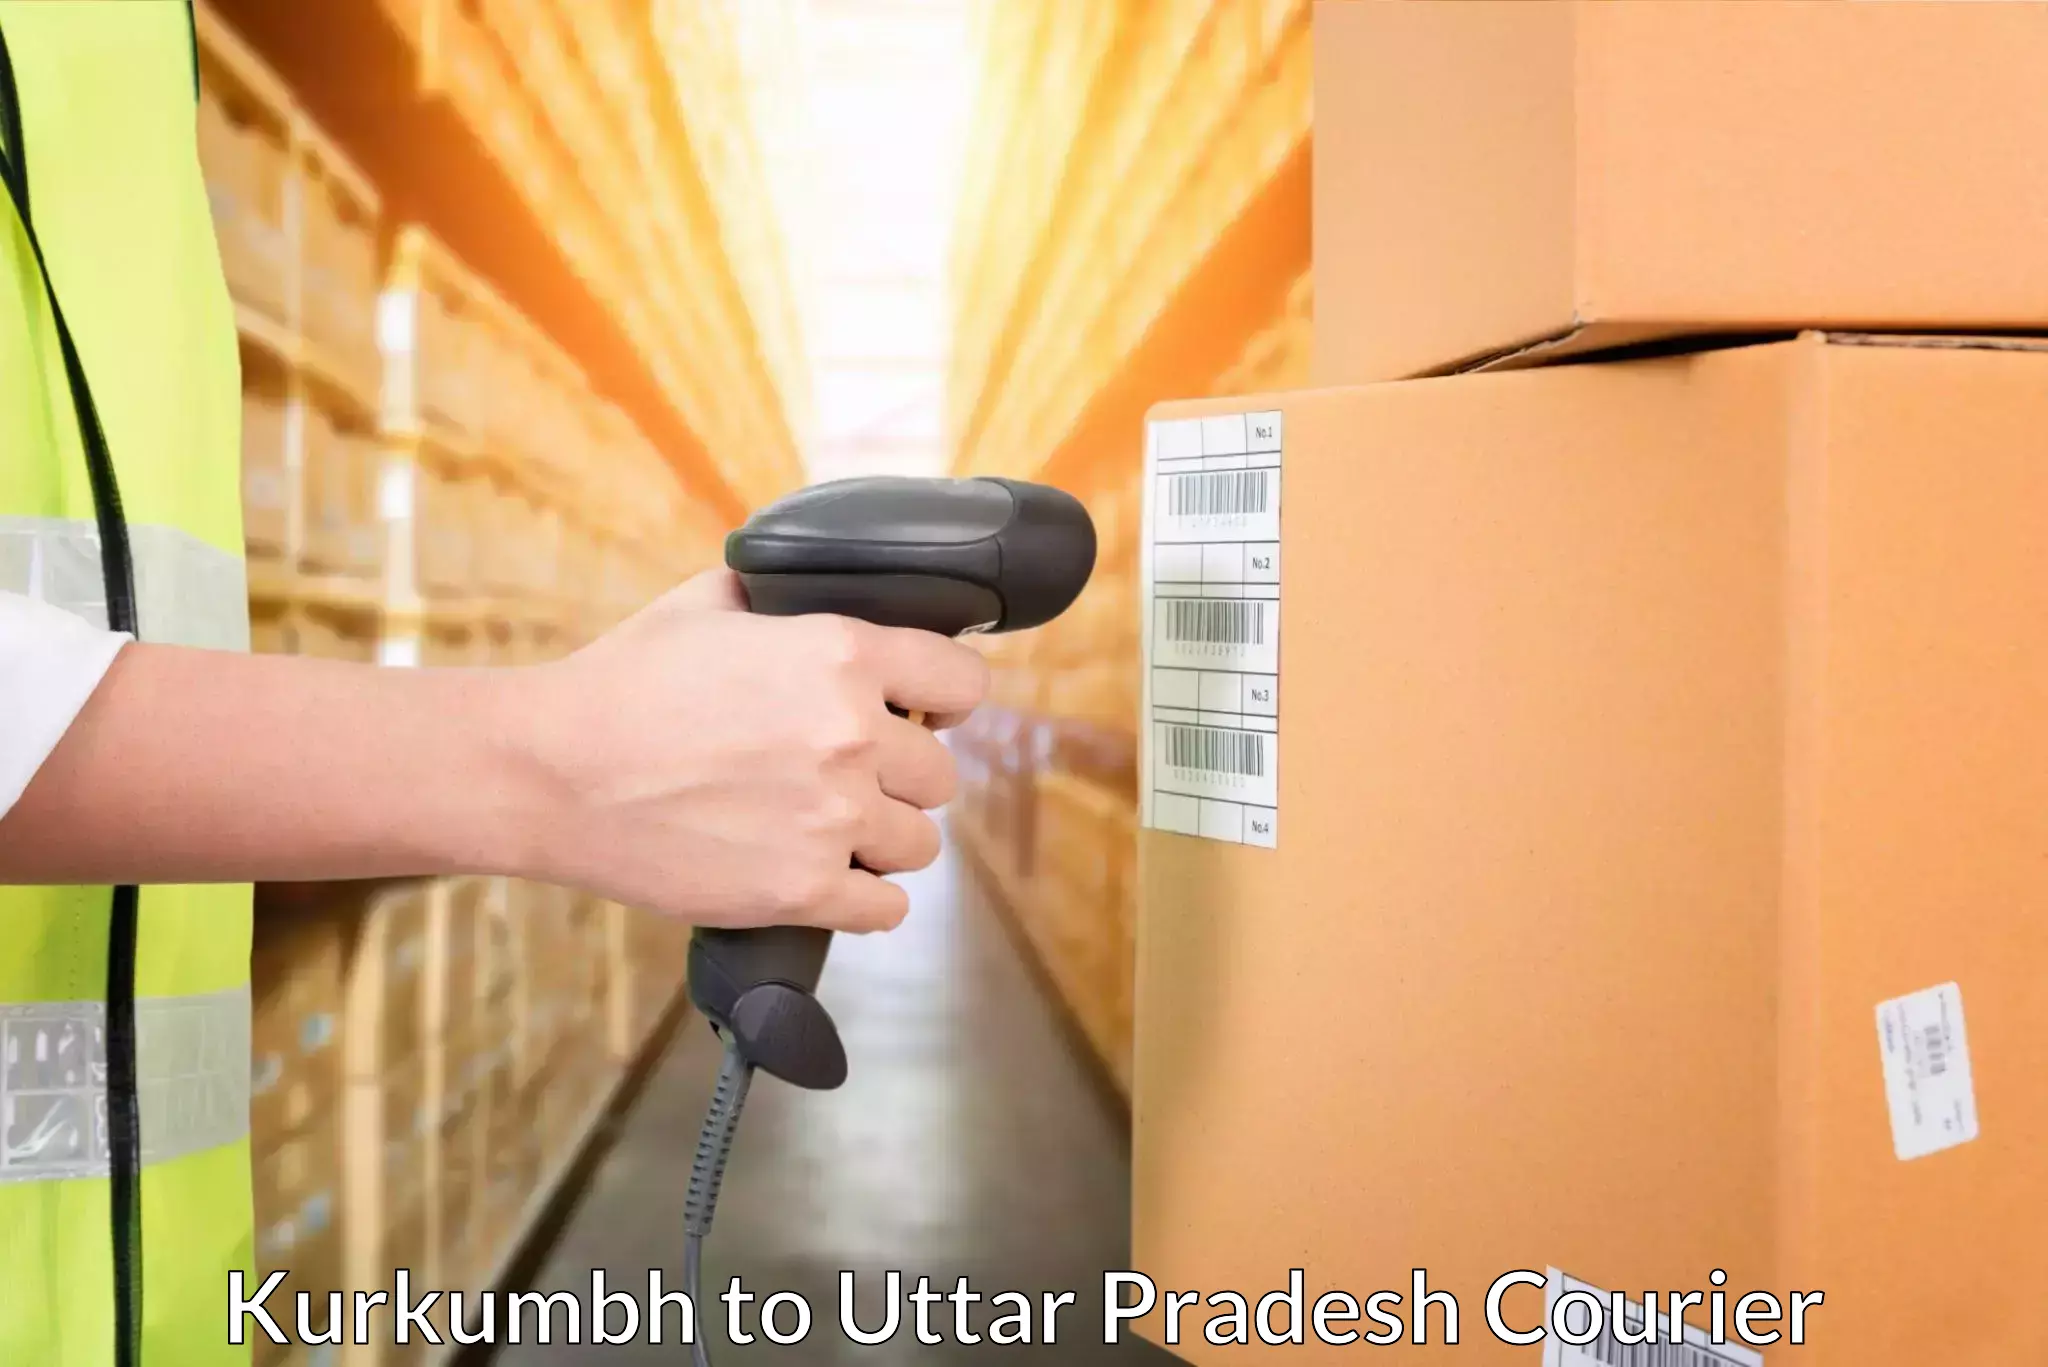 Door-to-door shipment in Kurkumbh to Sikandara